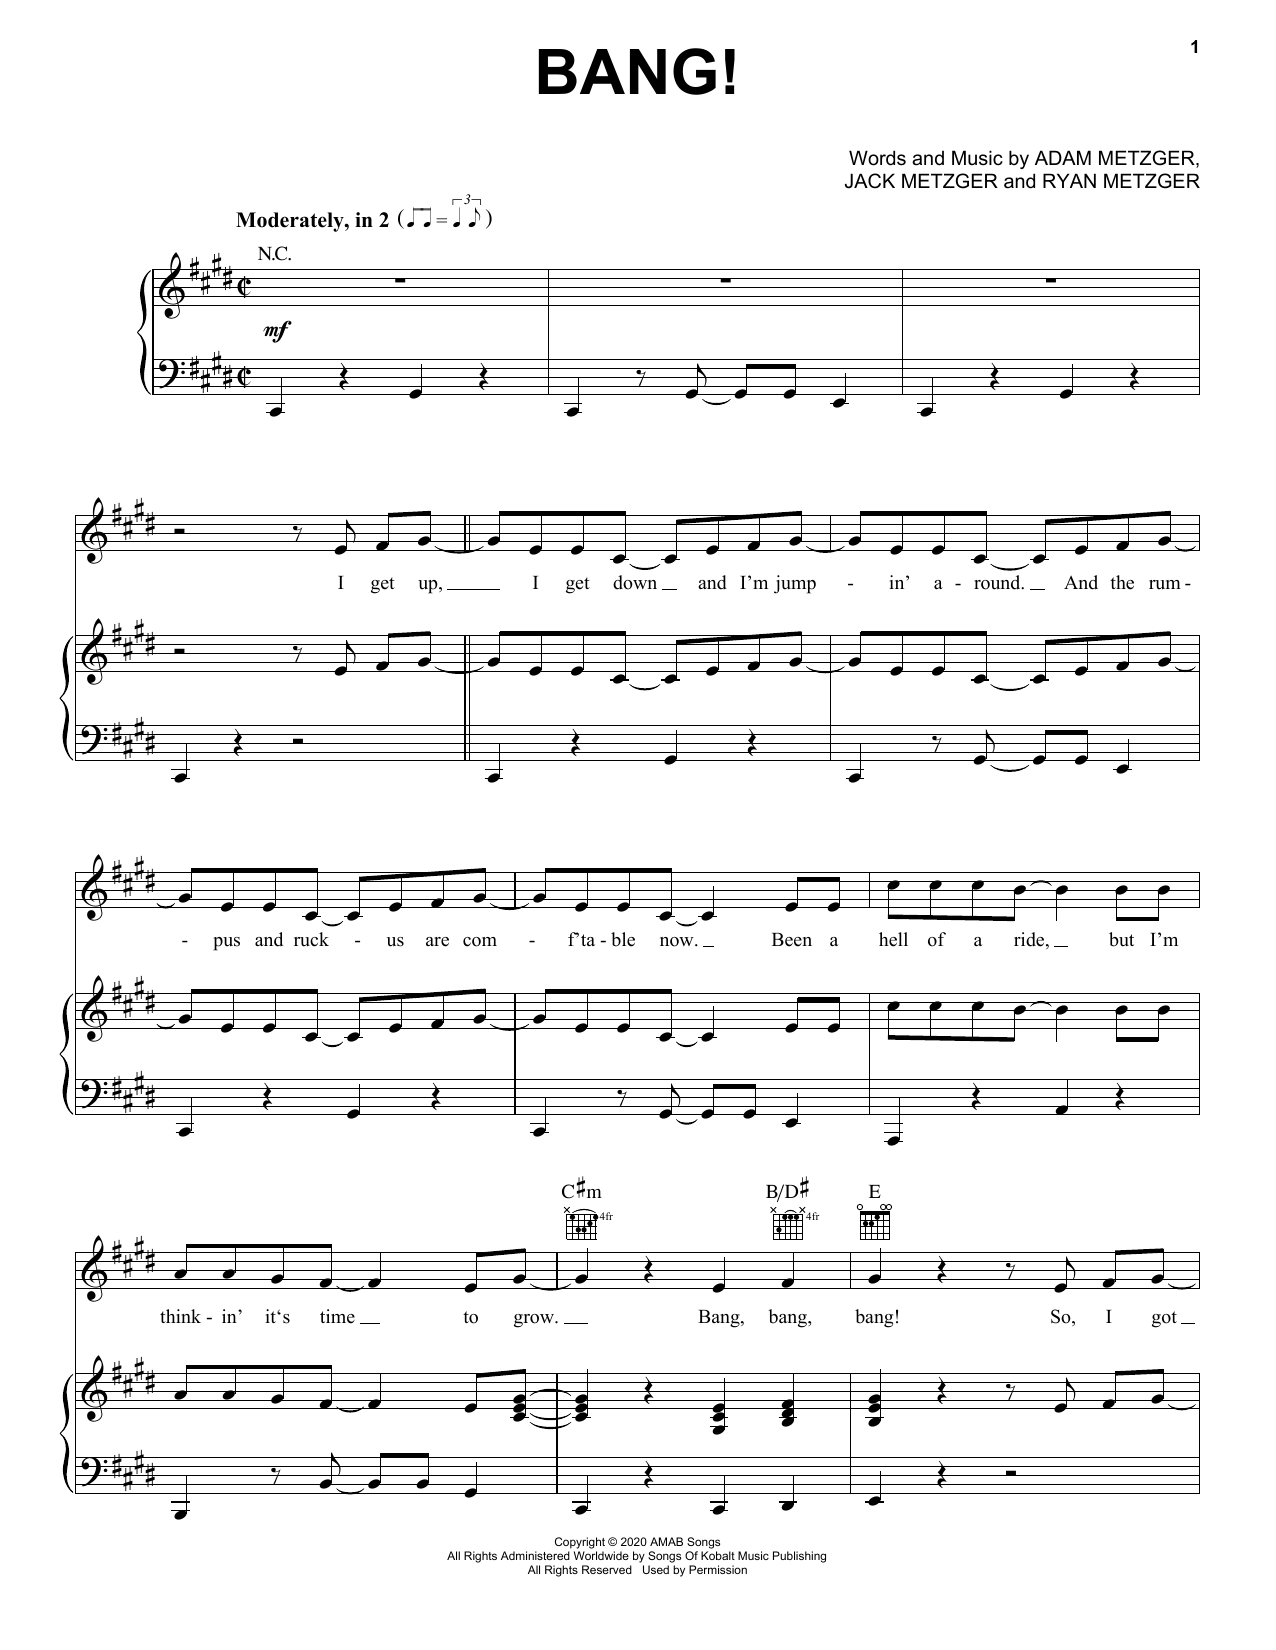 AJR Bang! Sheet Music Notes & Chords for Easy Piano - Download or Print PDF